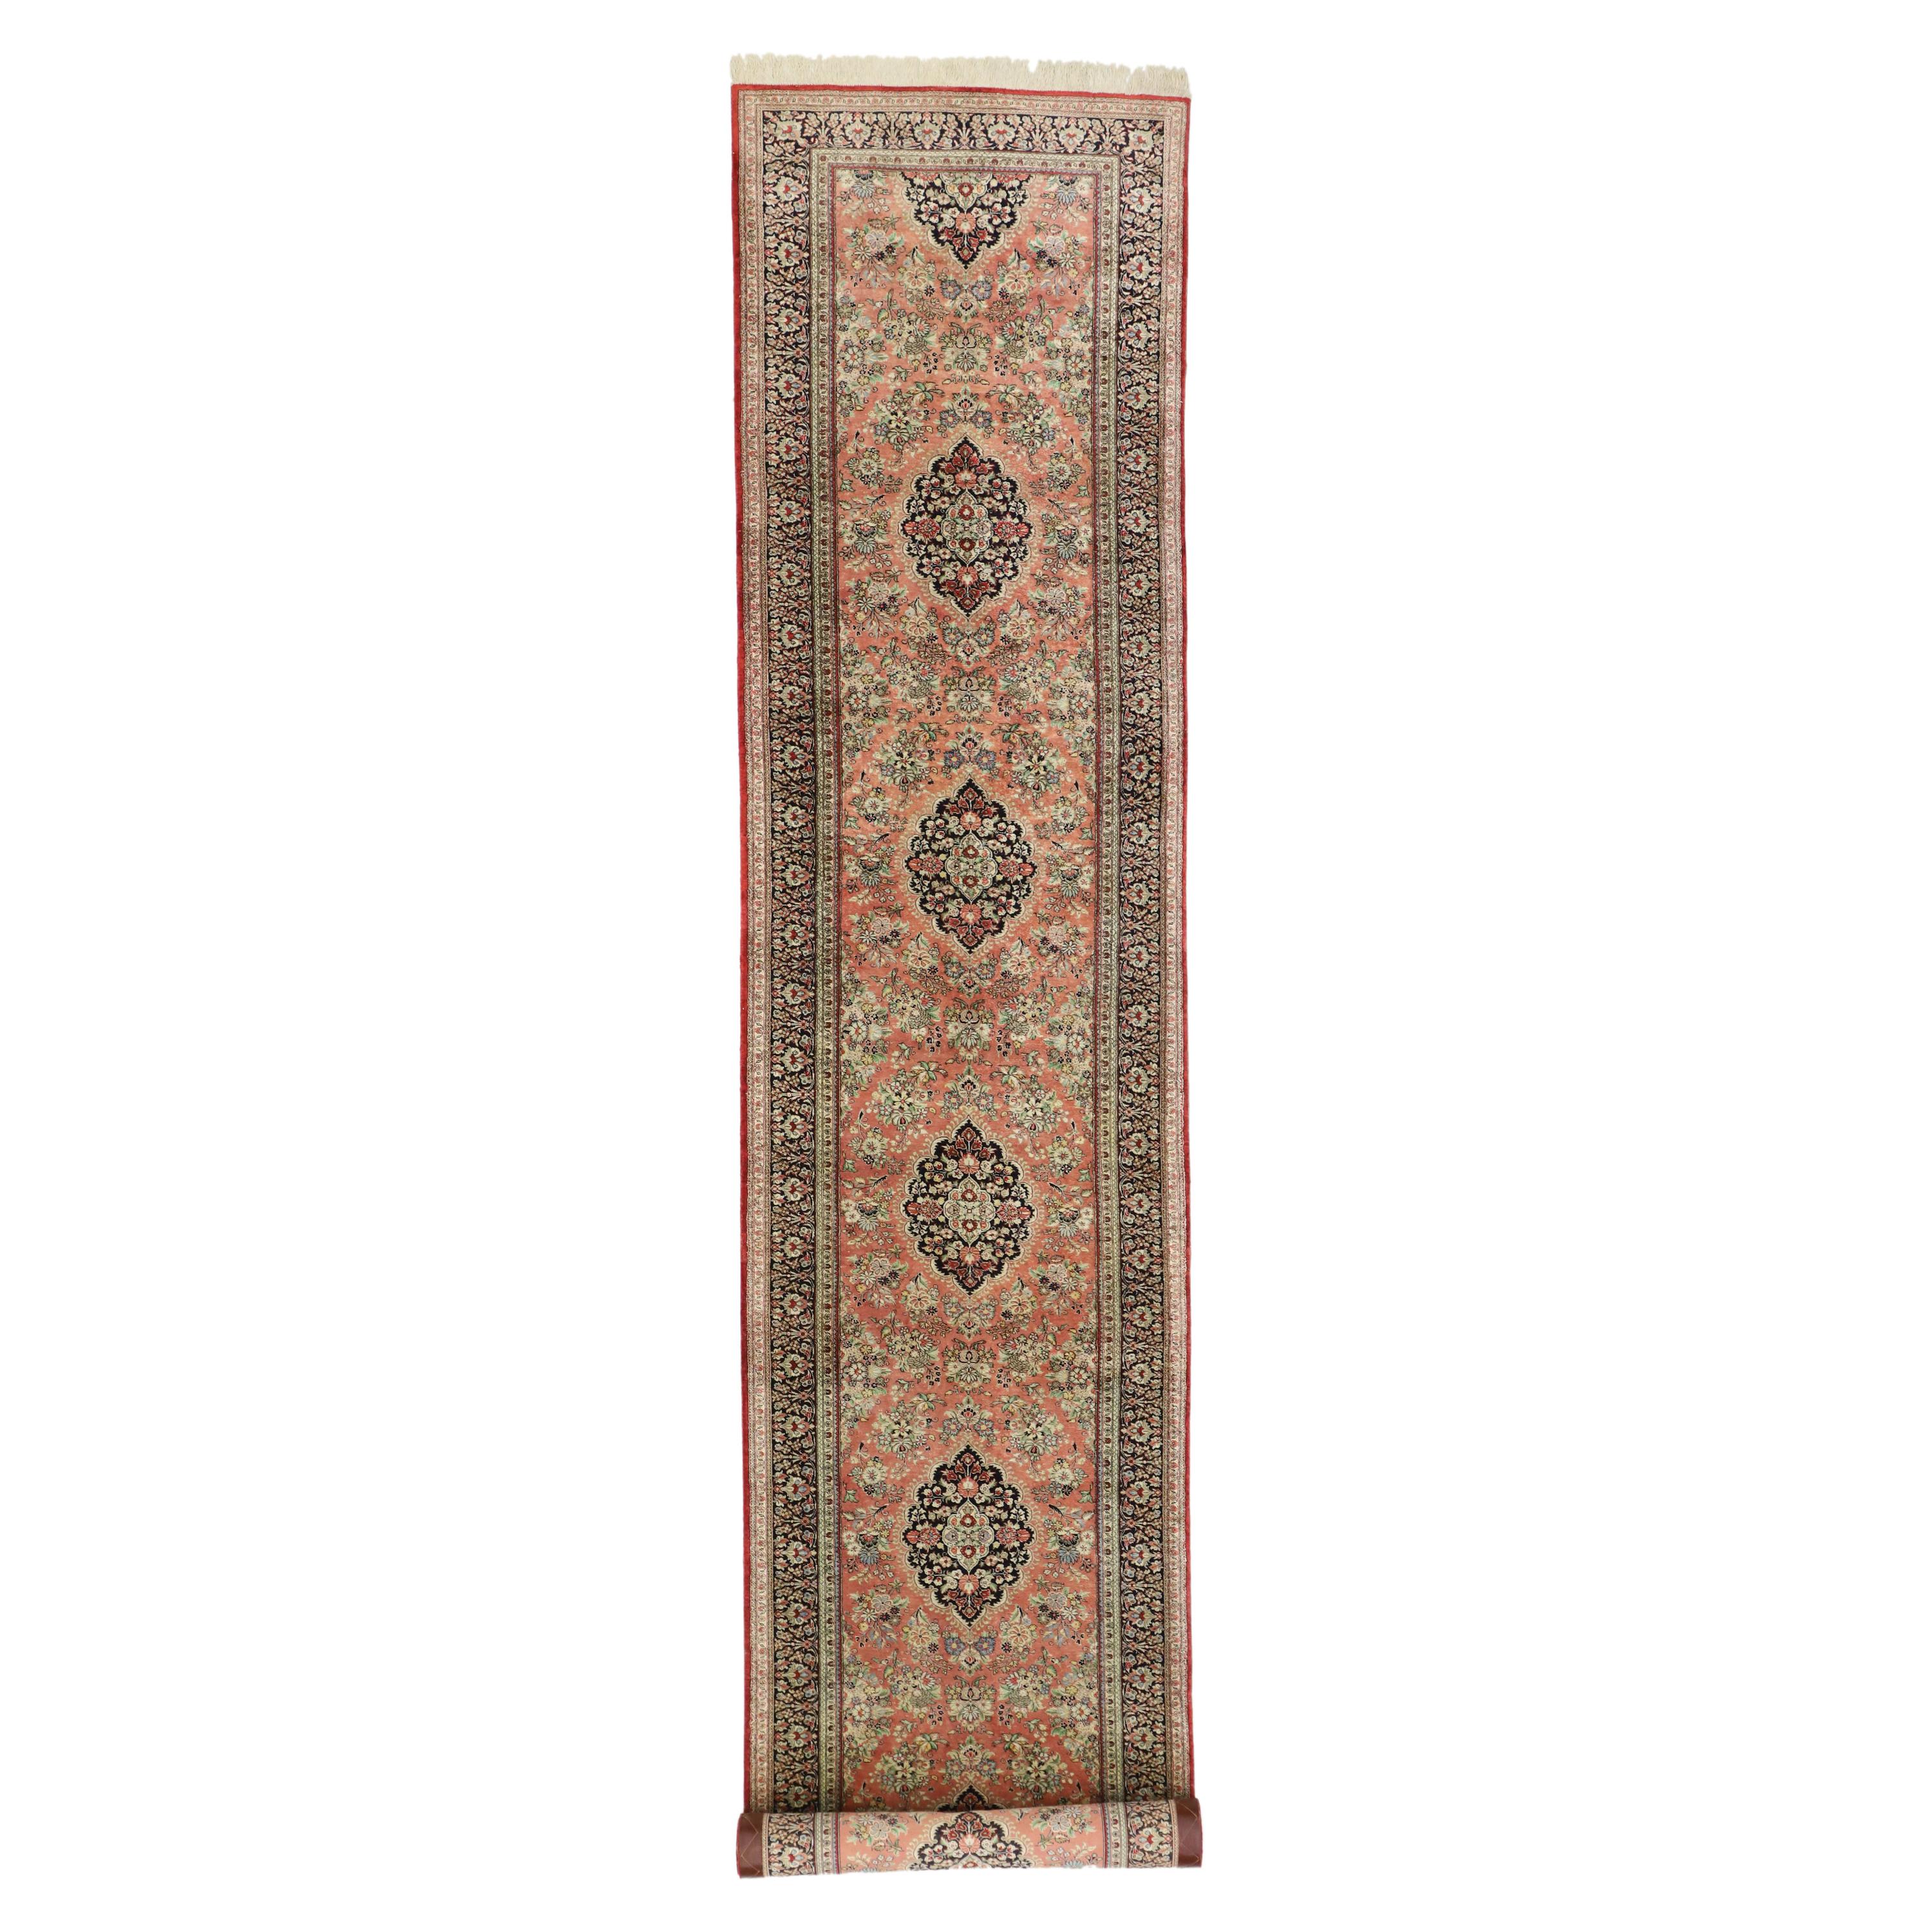 Vintage Persian Silk Qum Rug, French Rococo Meets Perpetually Posh